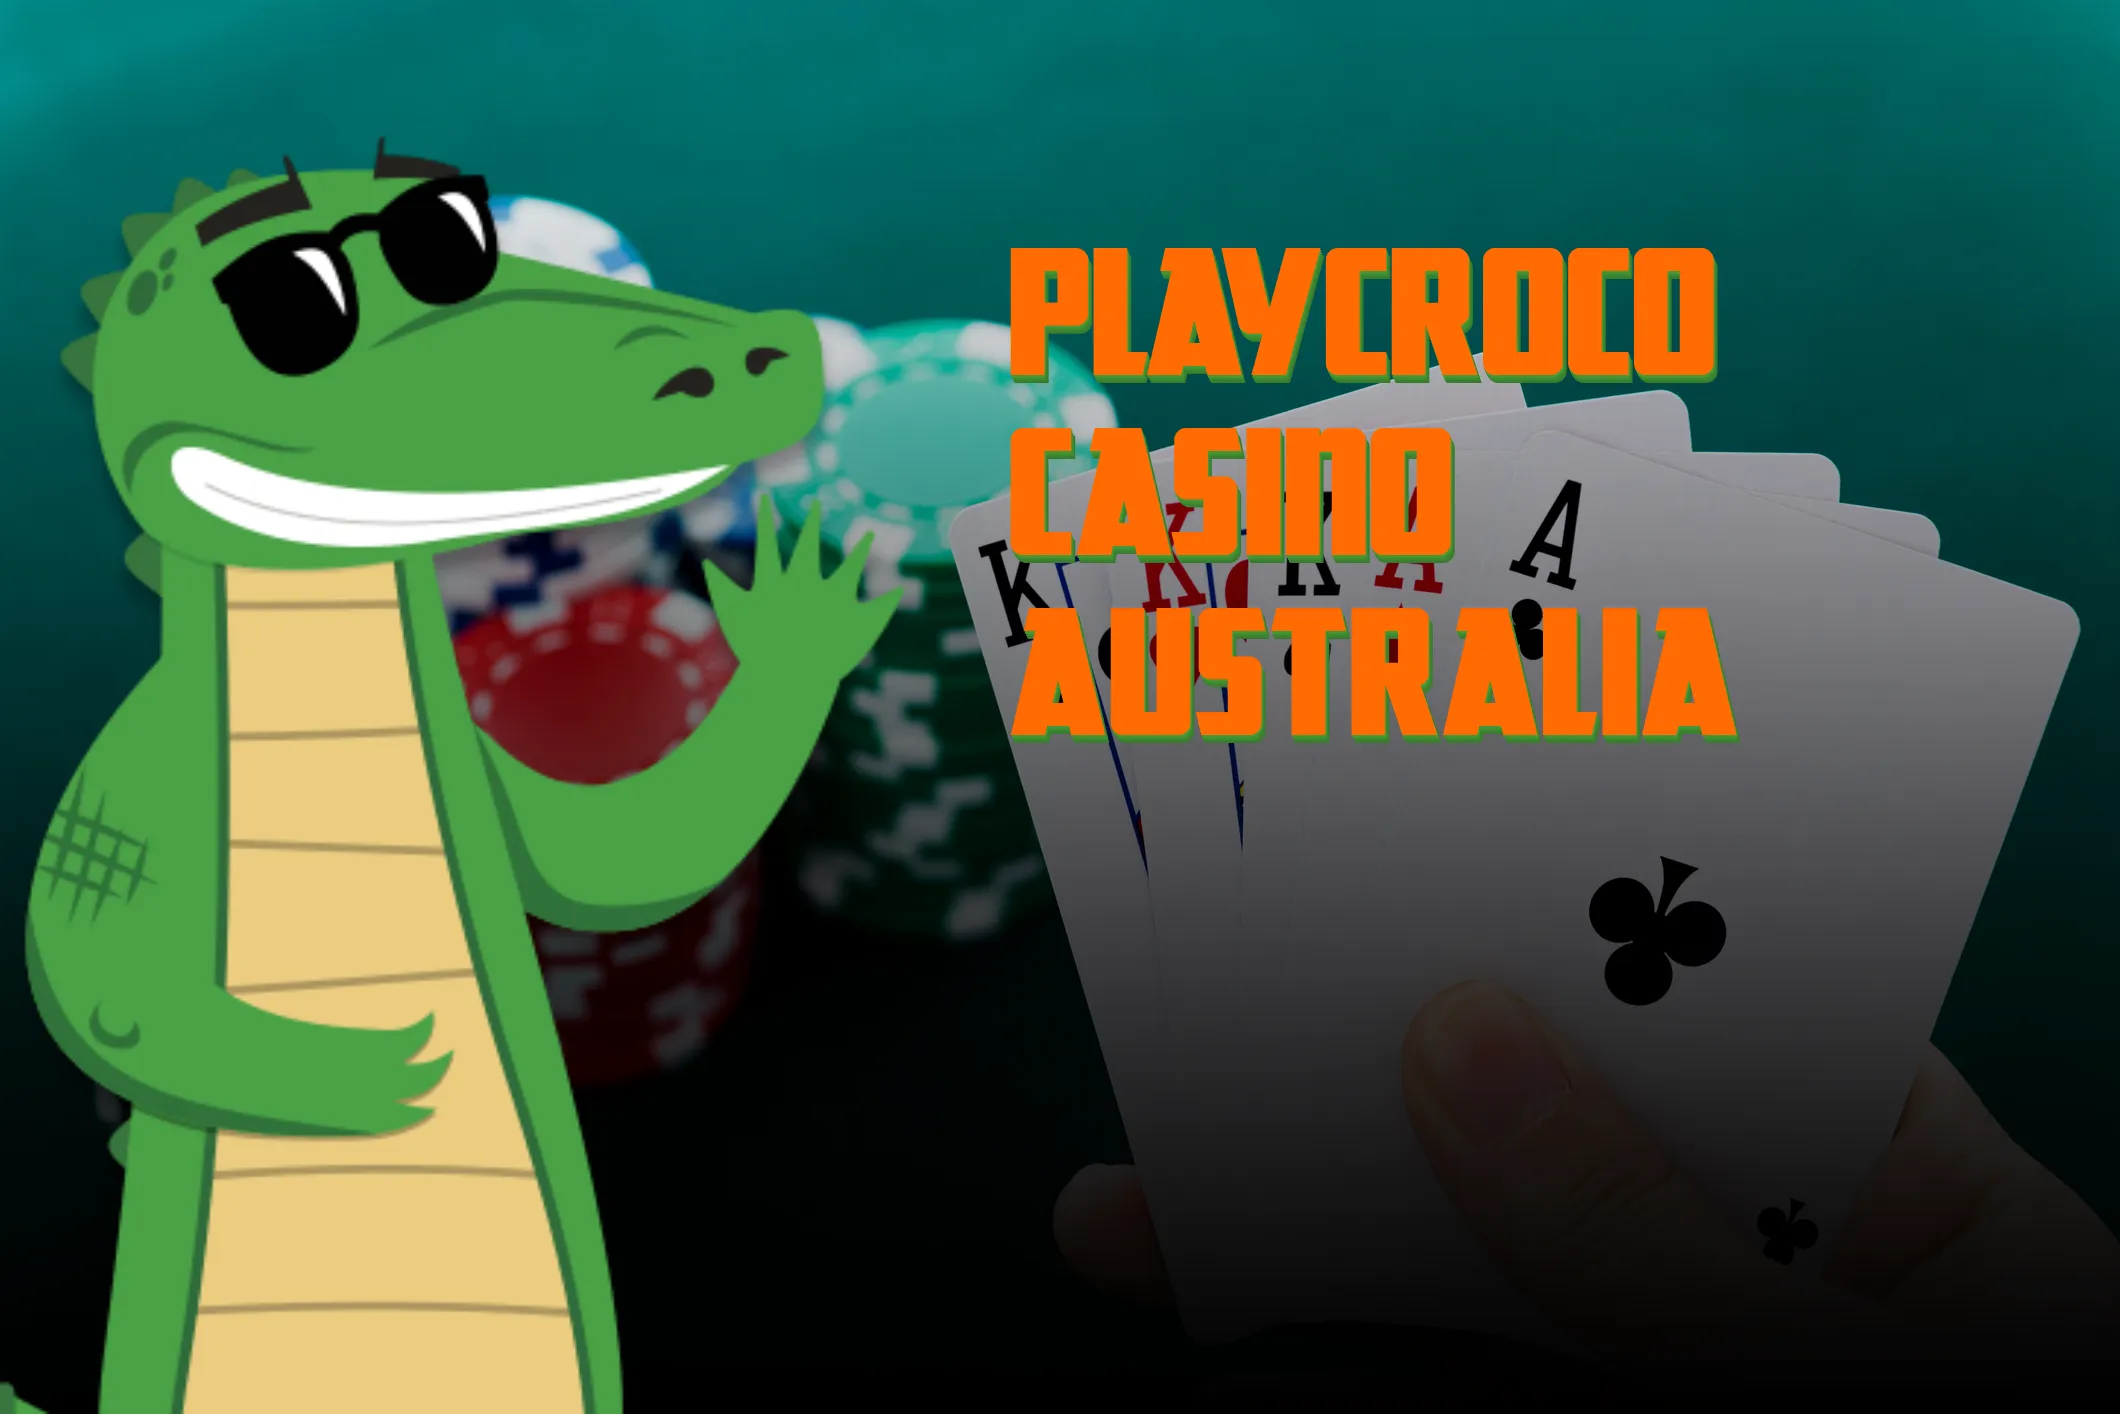 Playcroco Casino Australia